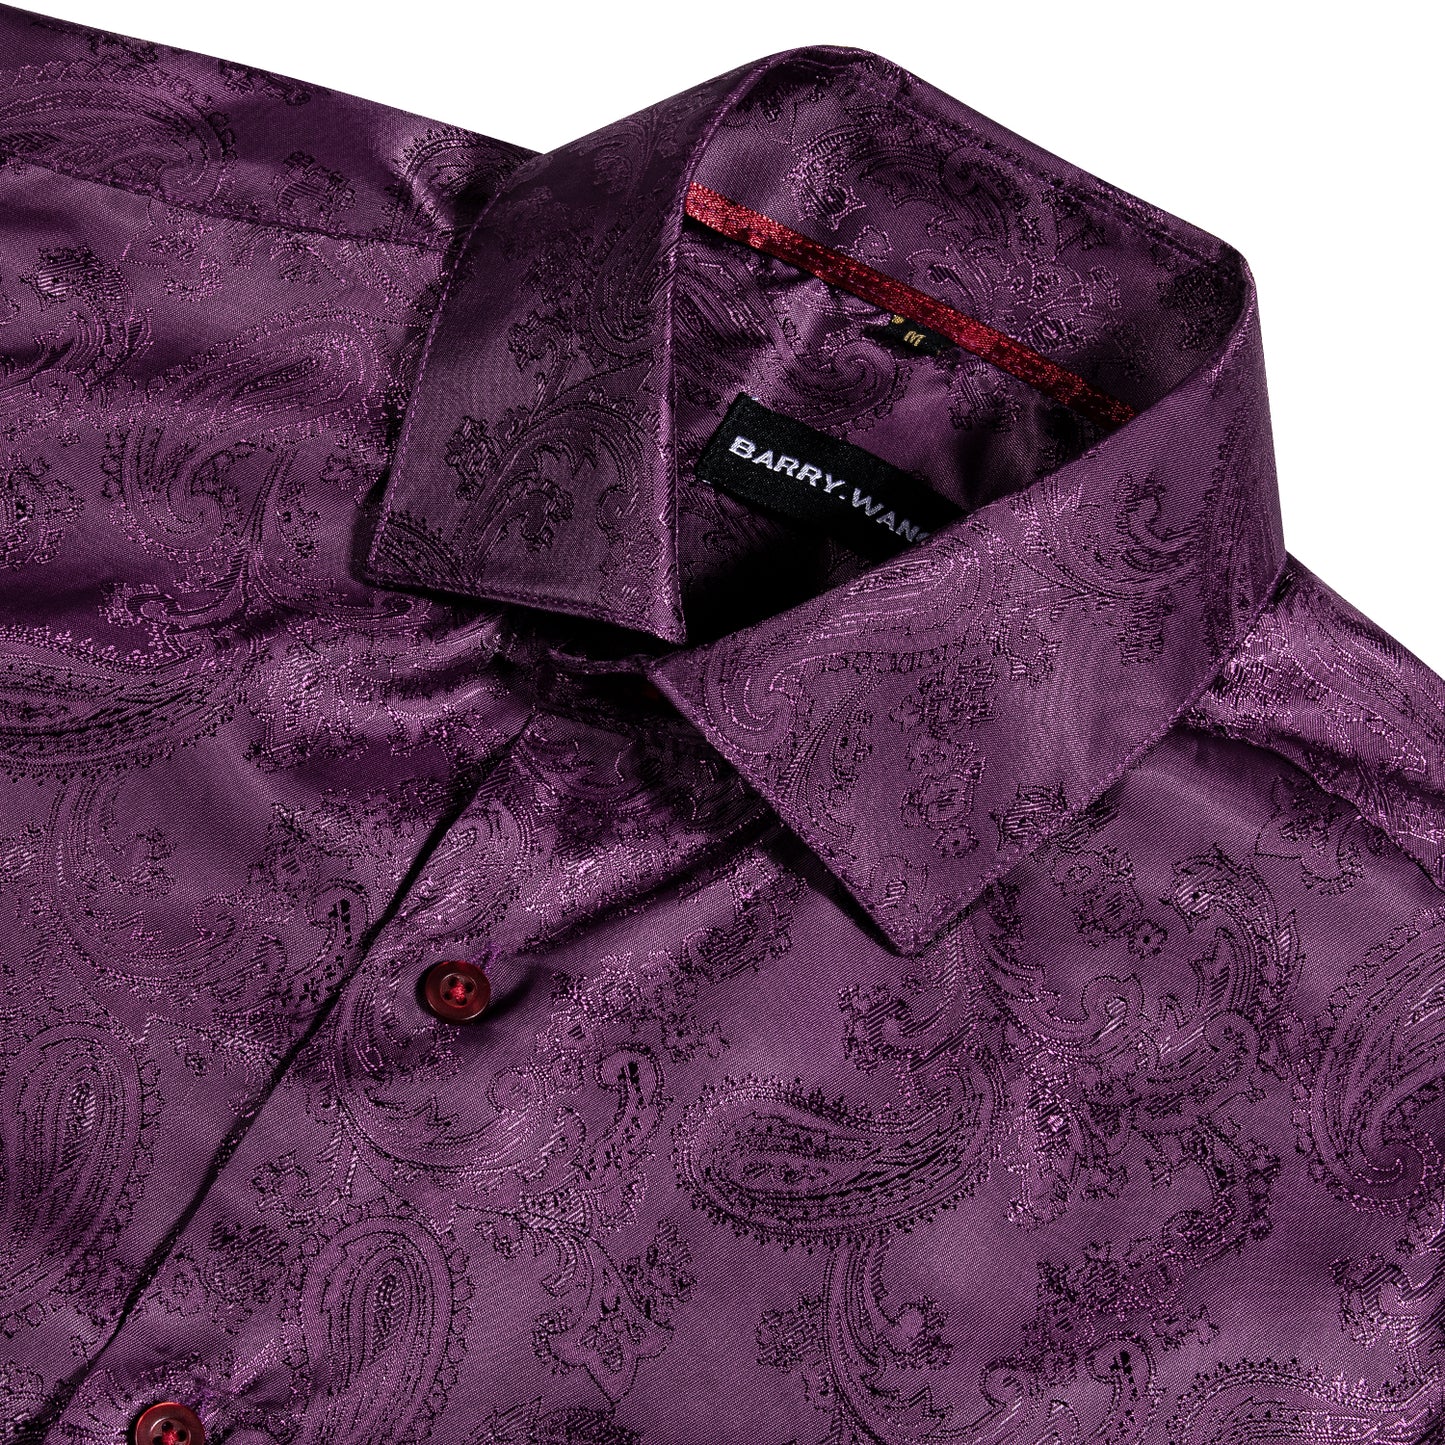 Novelty Silky Shirt - Purple Paisley